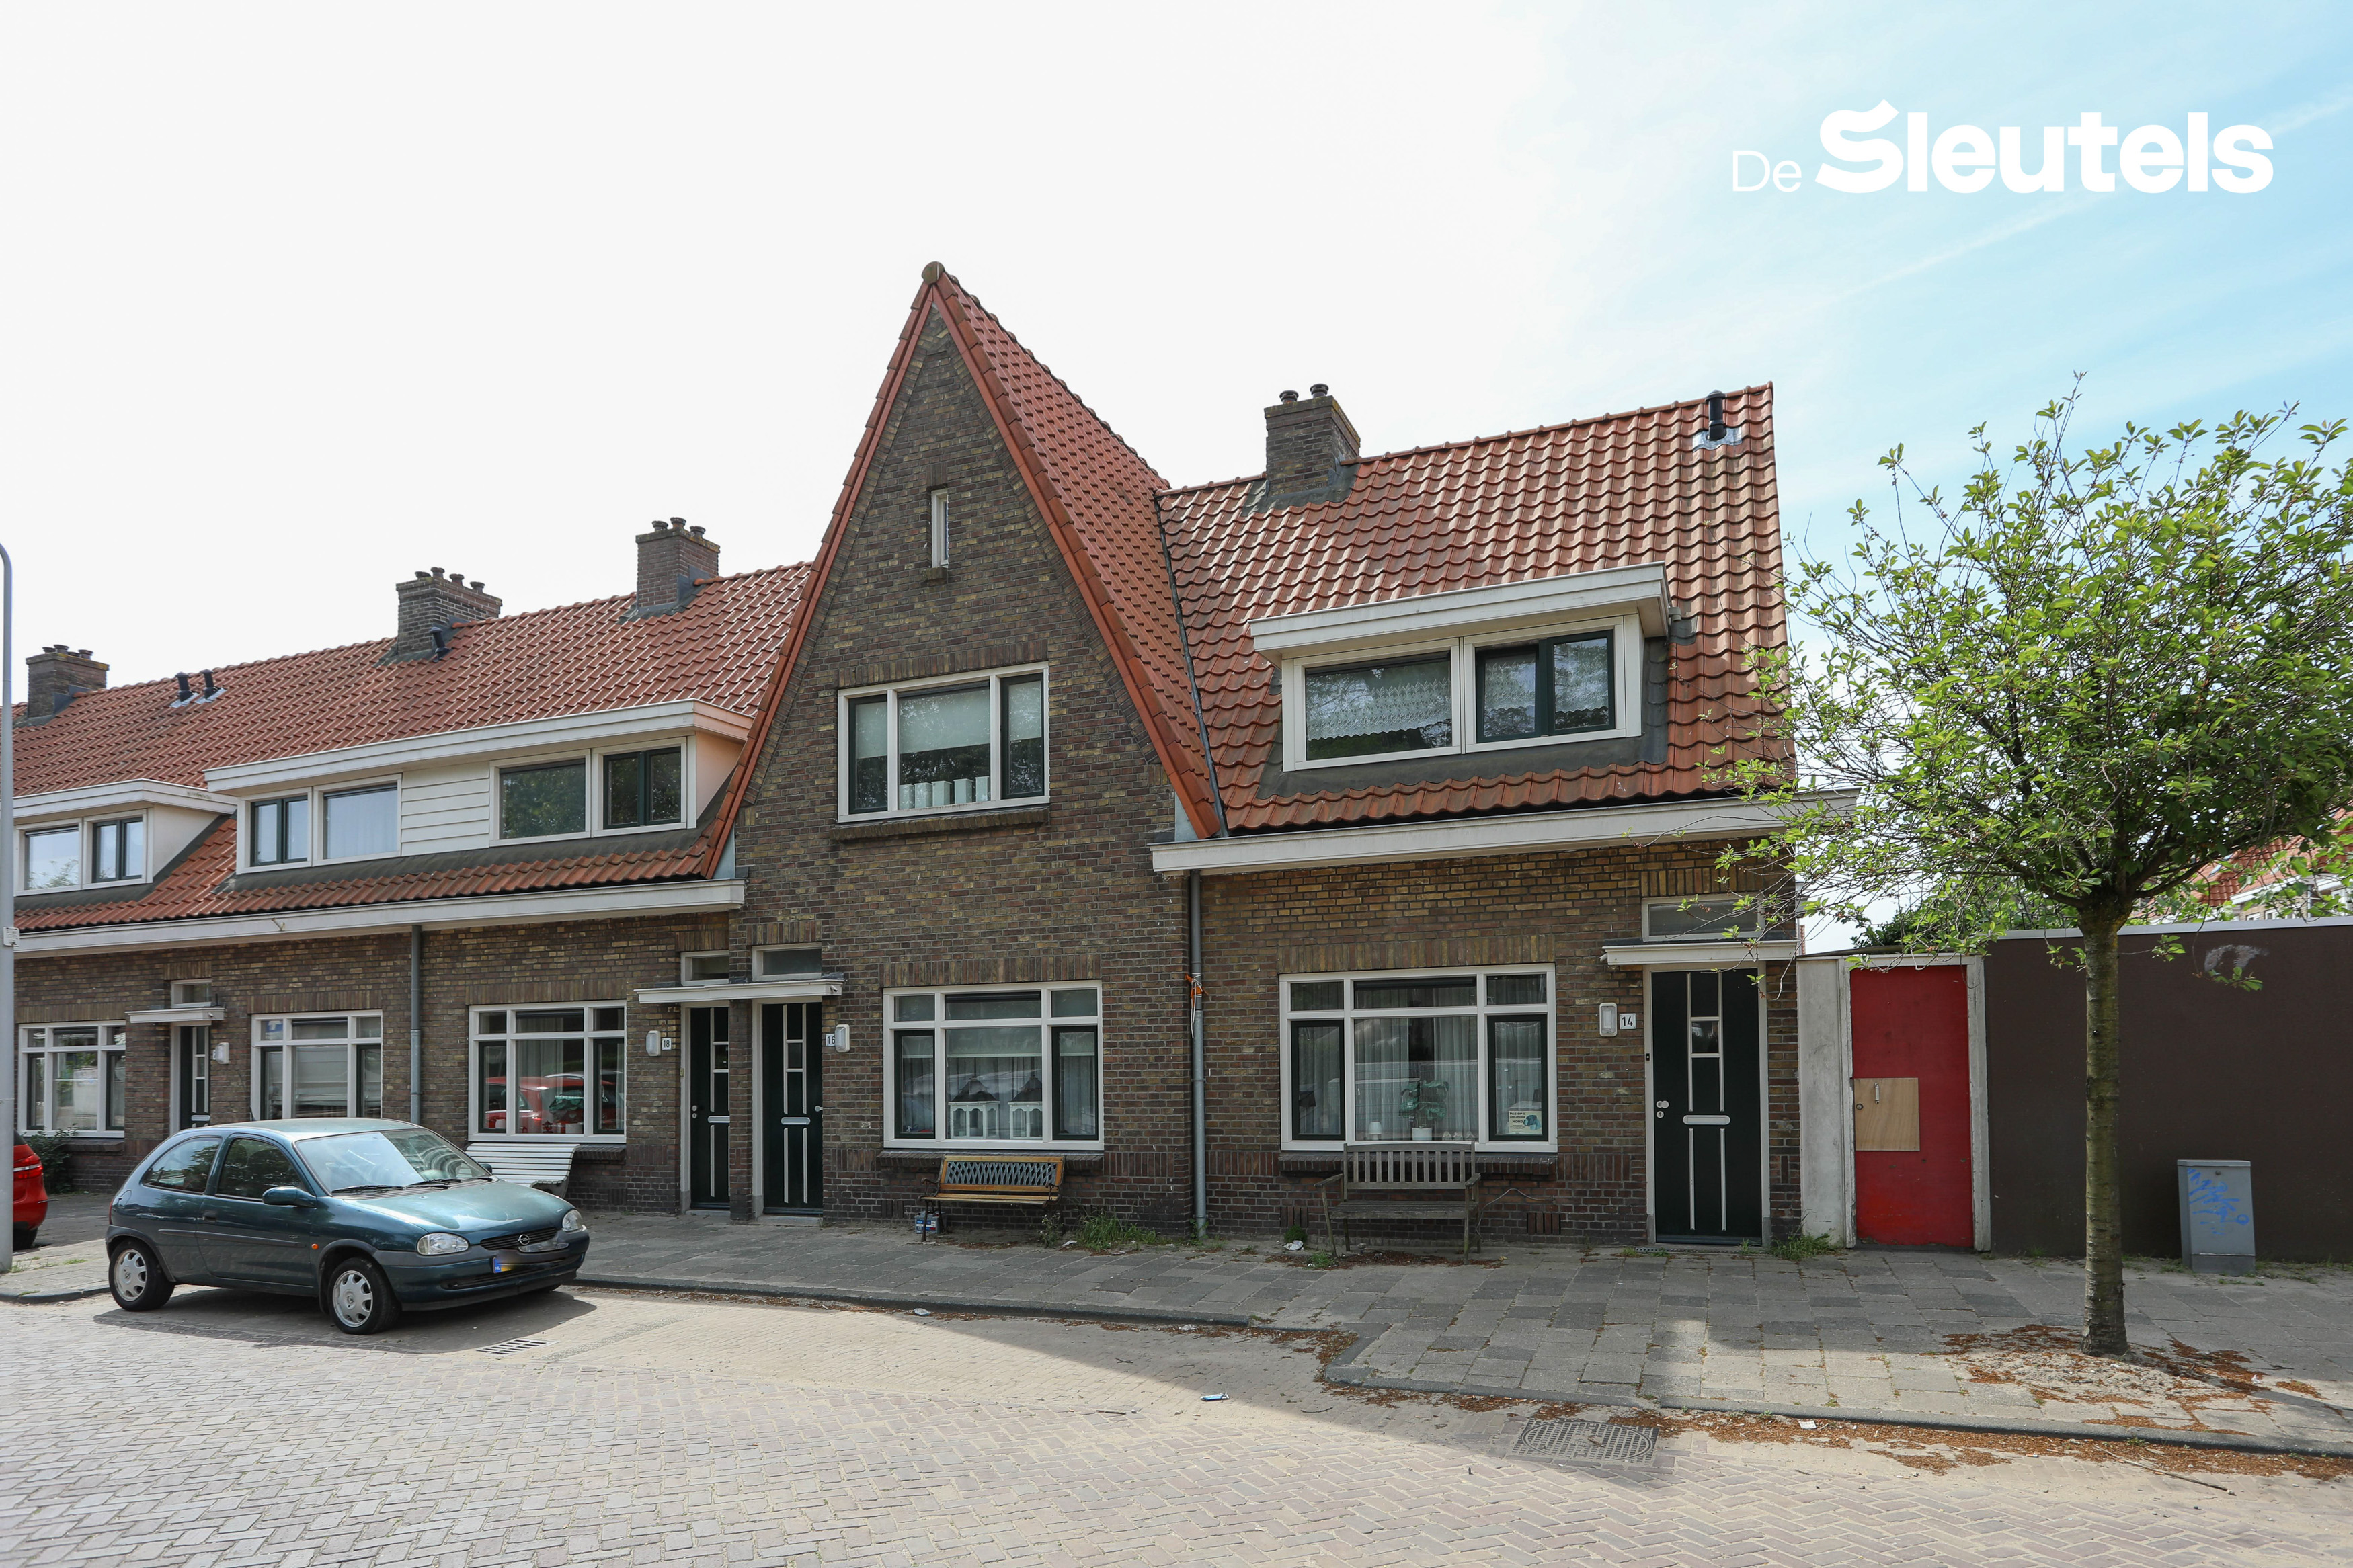 Atjehstraat 14, 2315 CV Leiden, Nederland